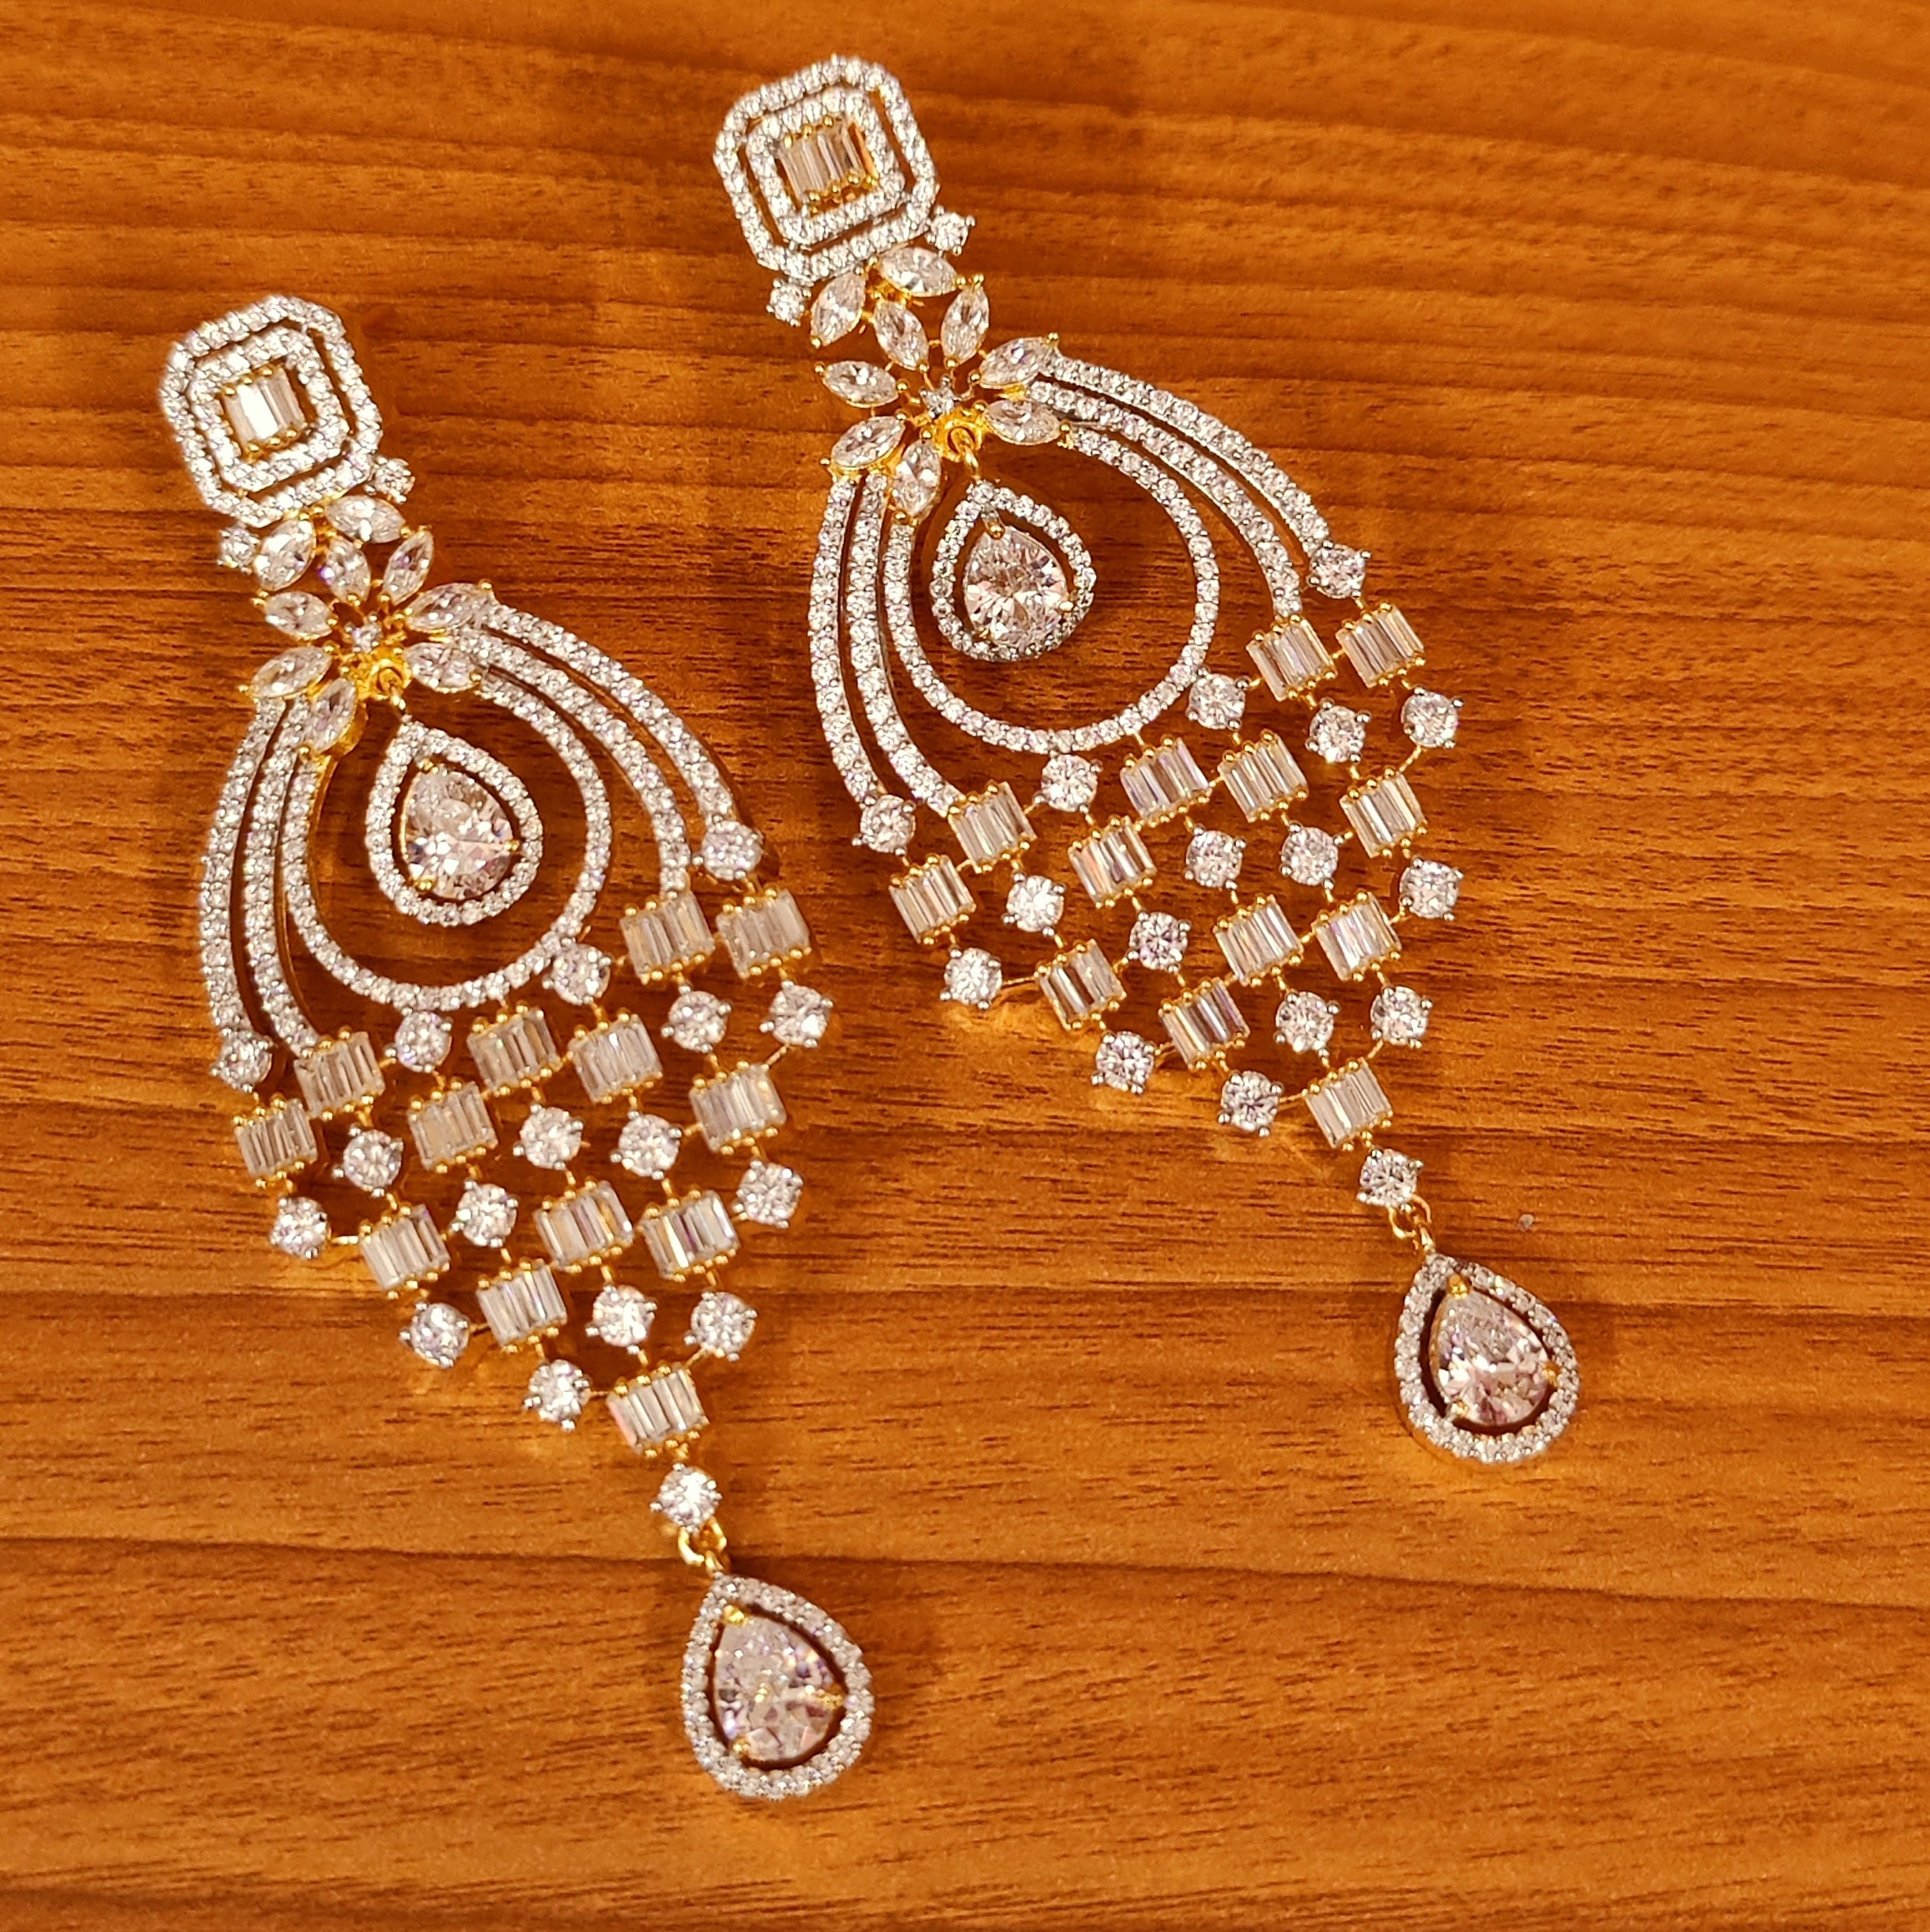 Velvetcase 10k Rose Gold and Diamond Stud Earrings : Amazon.in: Fashion